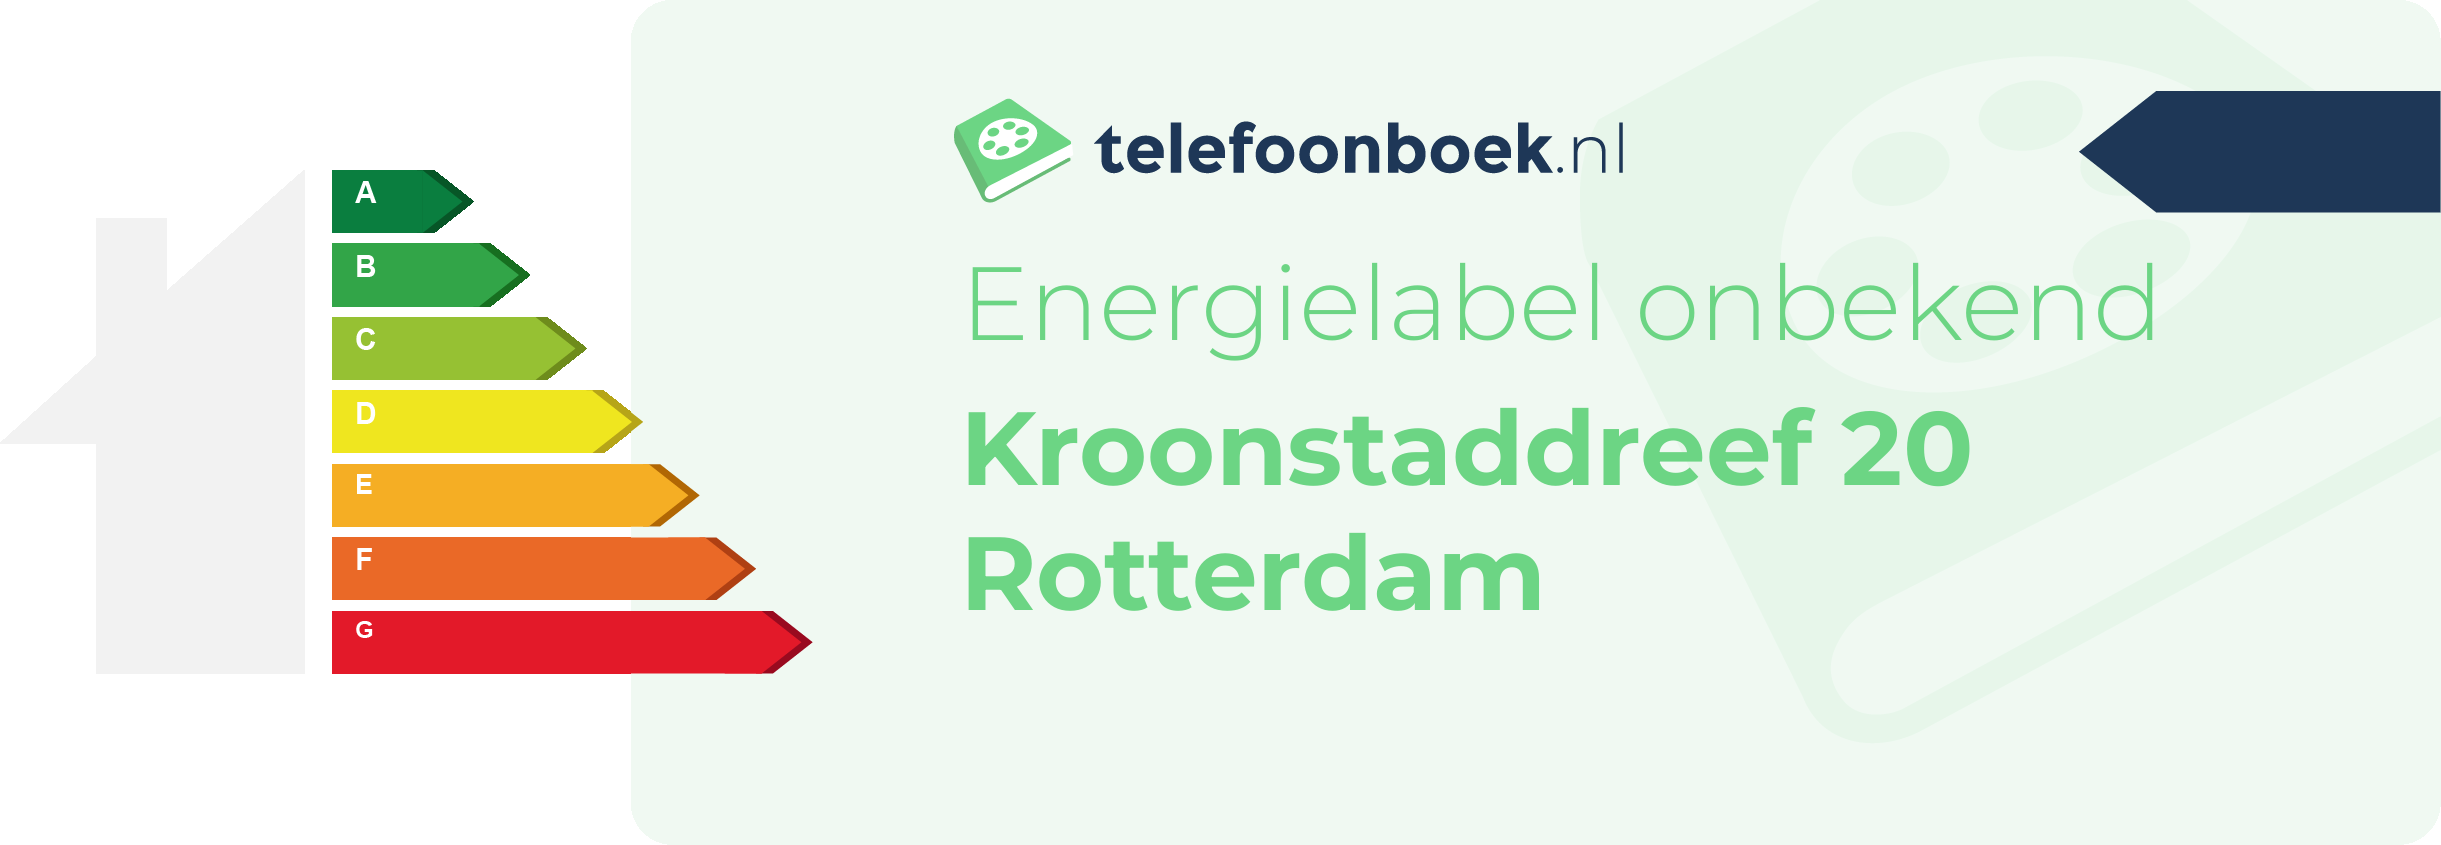 Energielabel Kroonstaddreef 20 Rotterdam